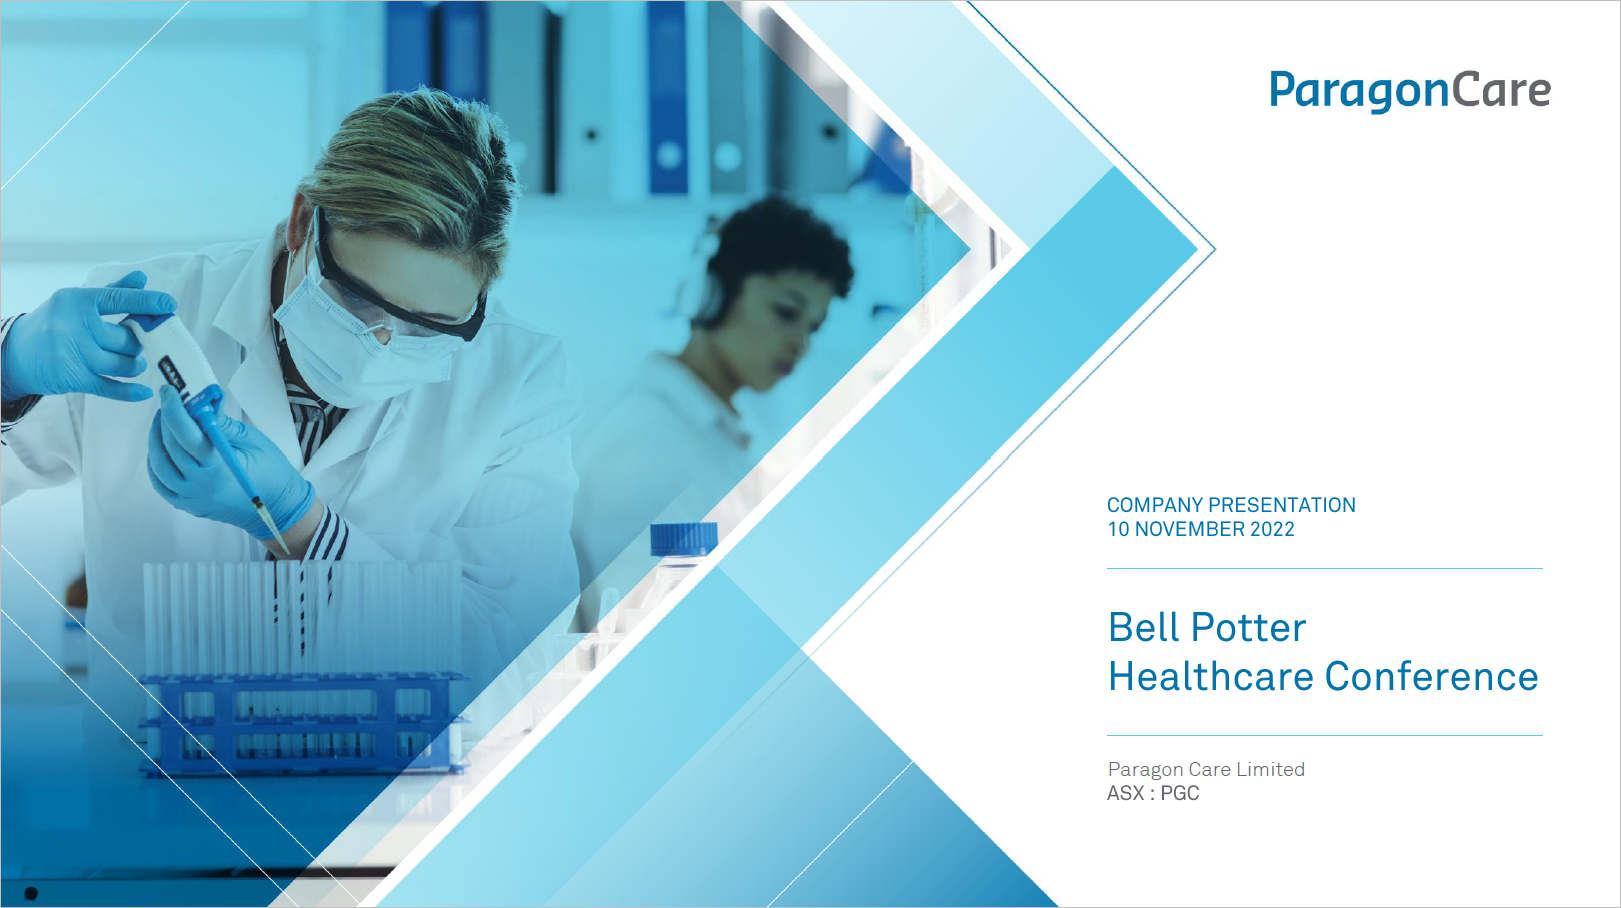 Bell Potter Healthcare Conference Presentation - PGC Paragon Care Ltd